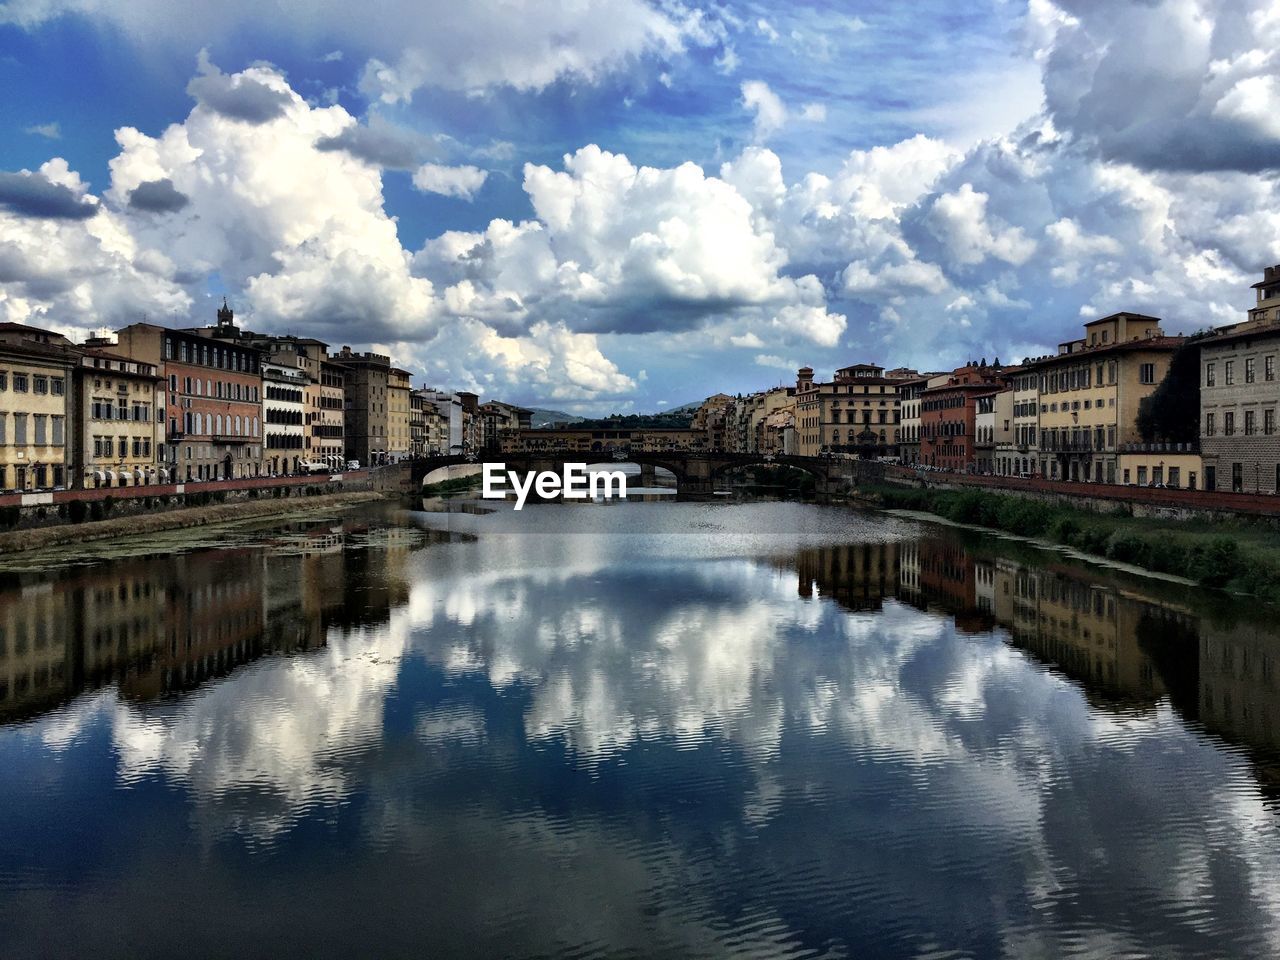 Ponte vecchio over arno river amidst buildings against cloudy sky